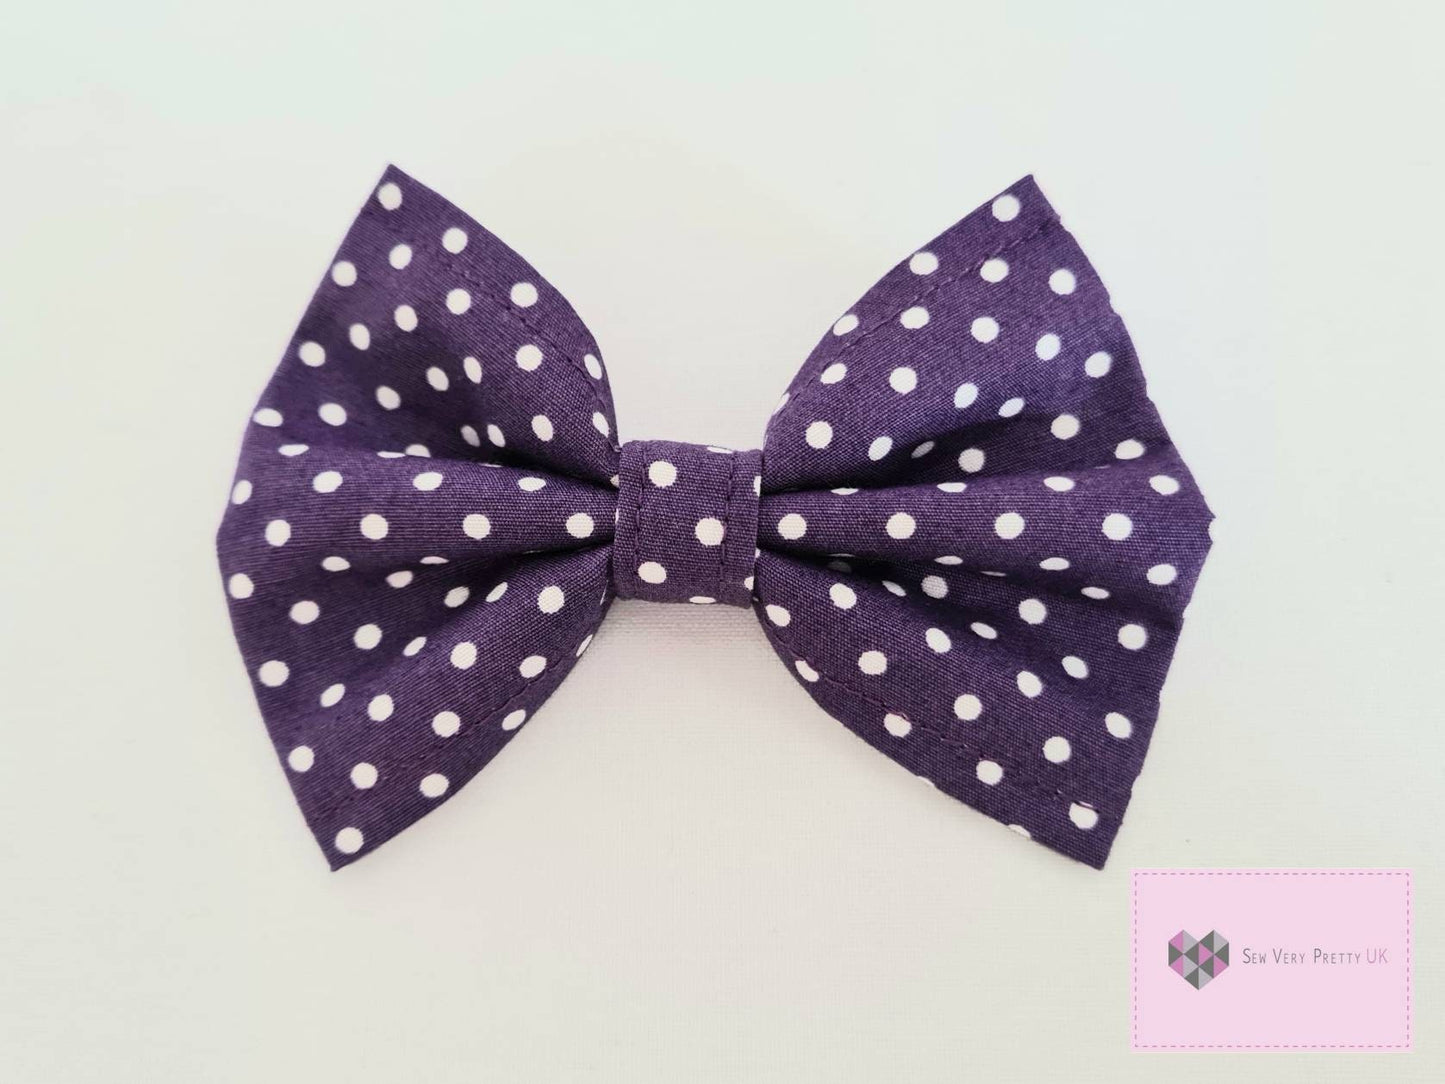 Purple polka dot bow tie